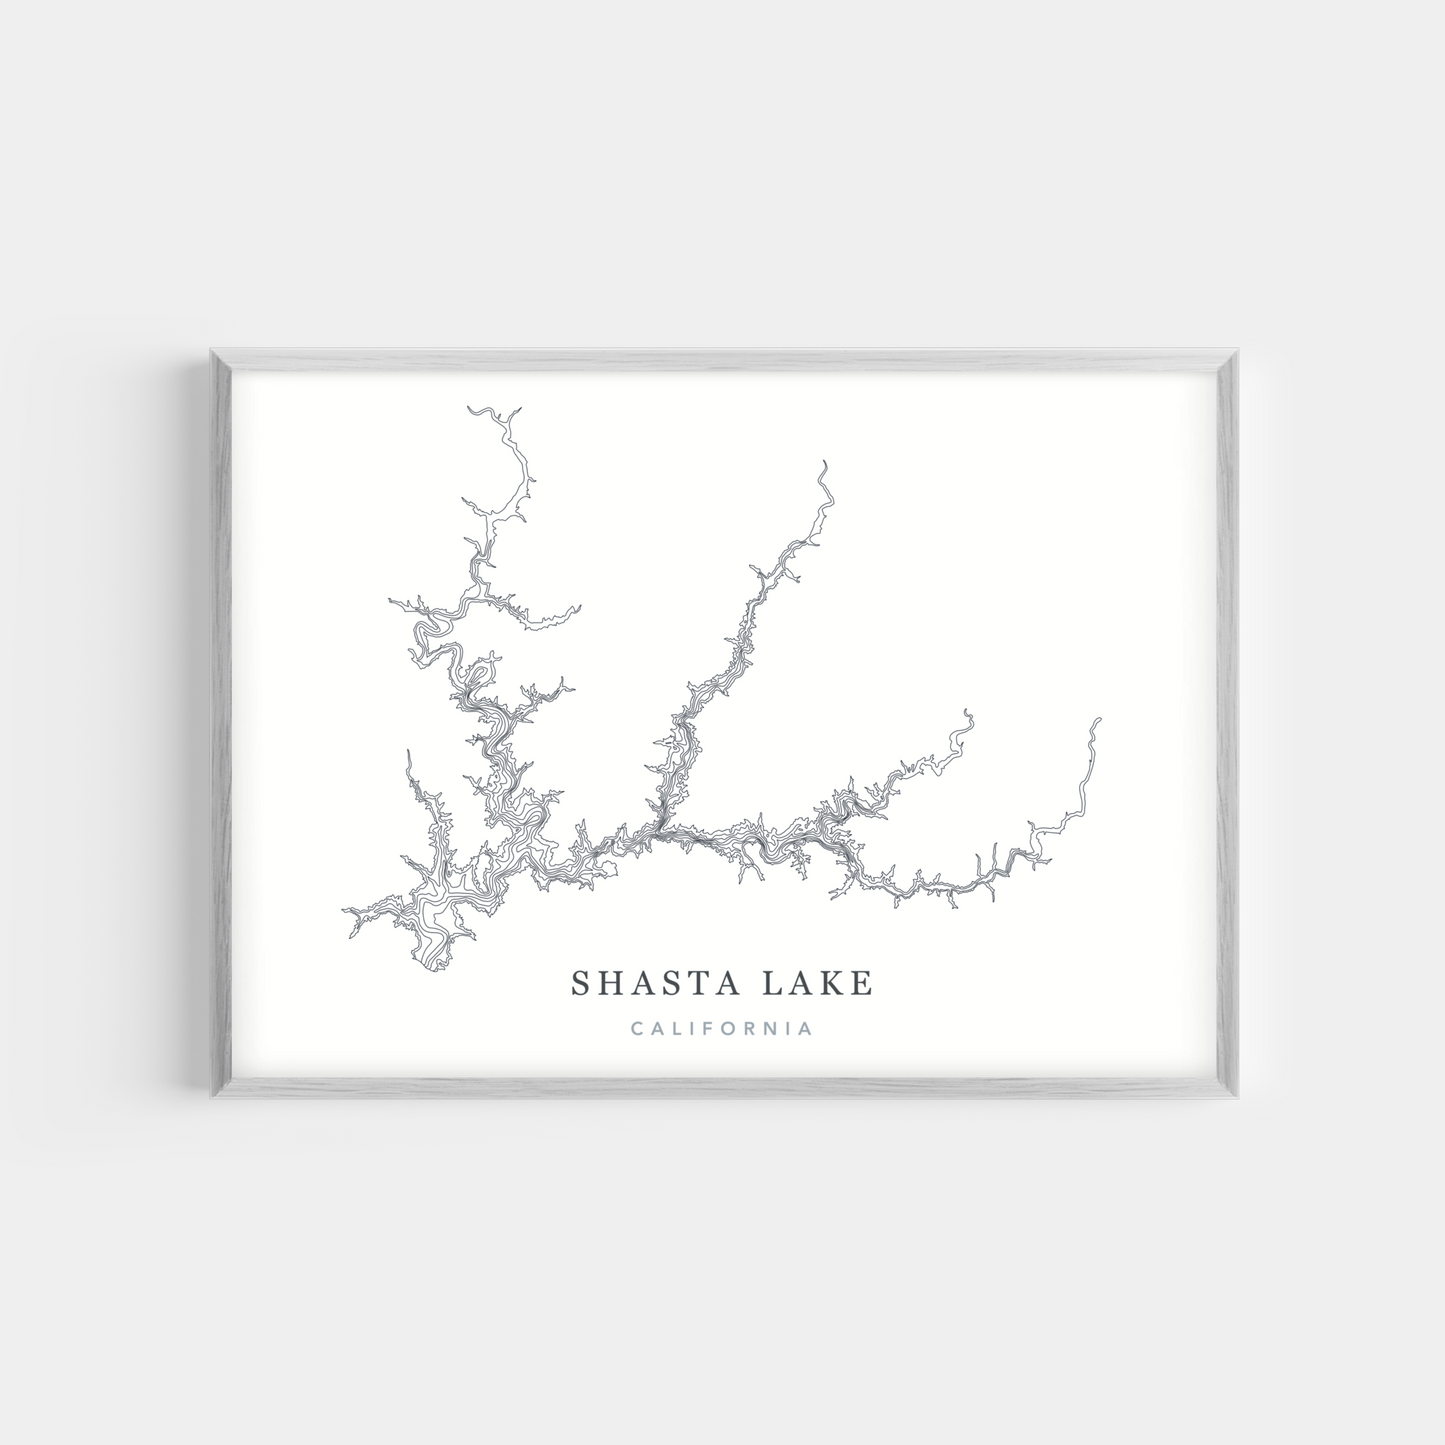 Shasta Lake, California | Photo Print